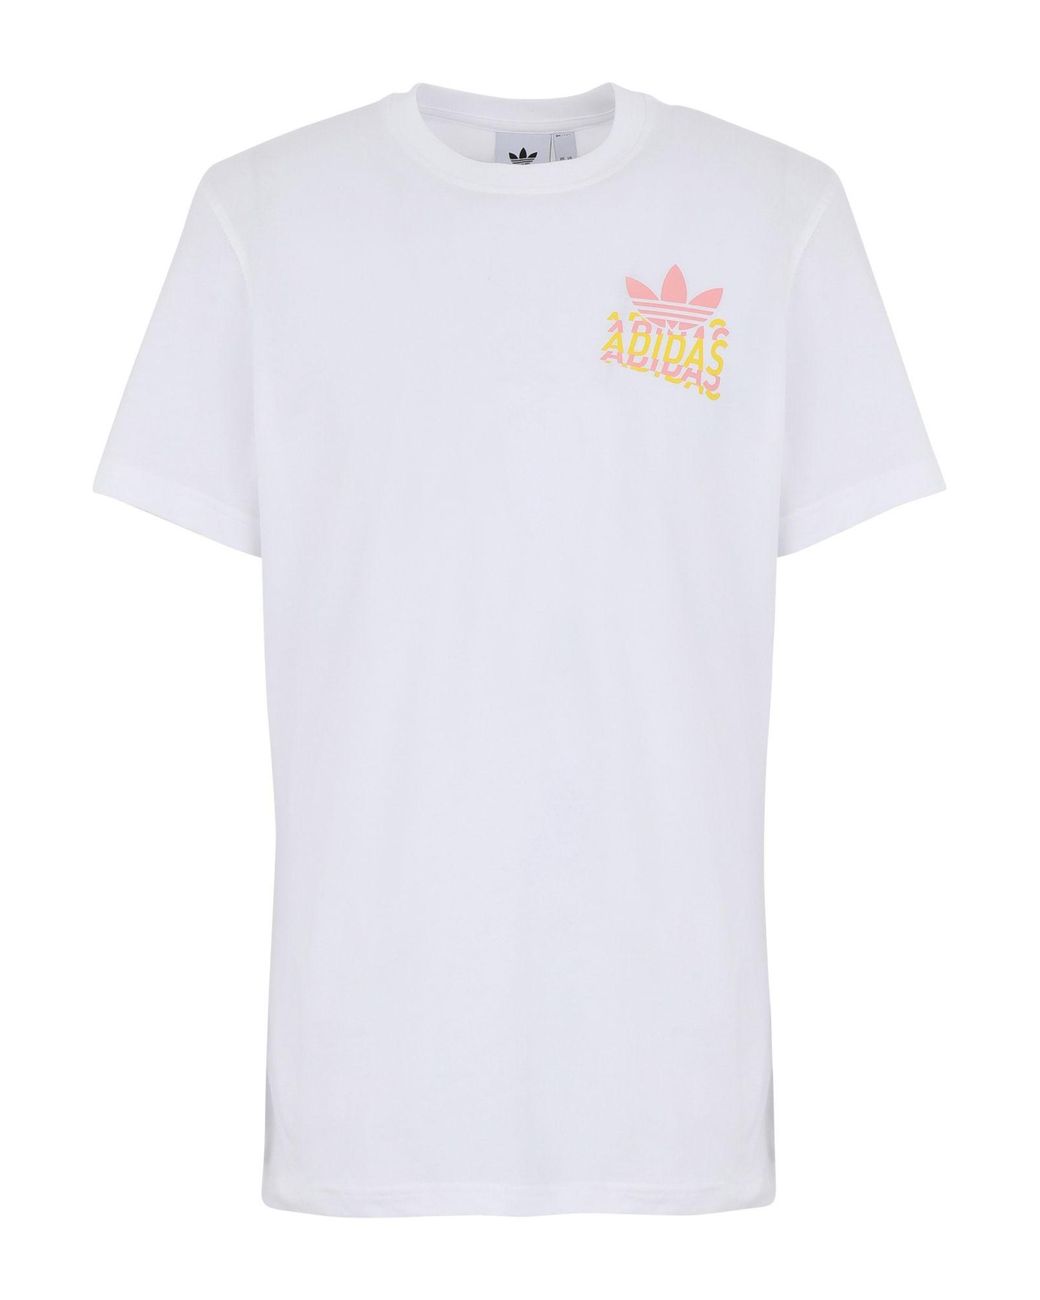 adidas Originals Cotton T-shirt in White for Men - Lyst